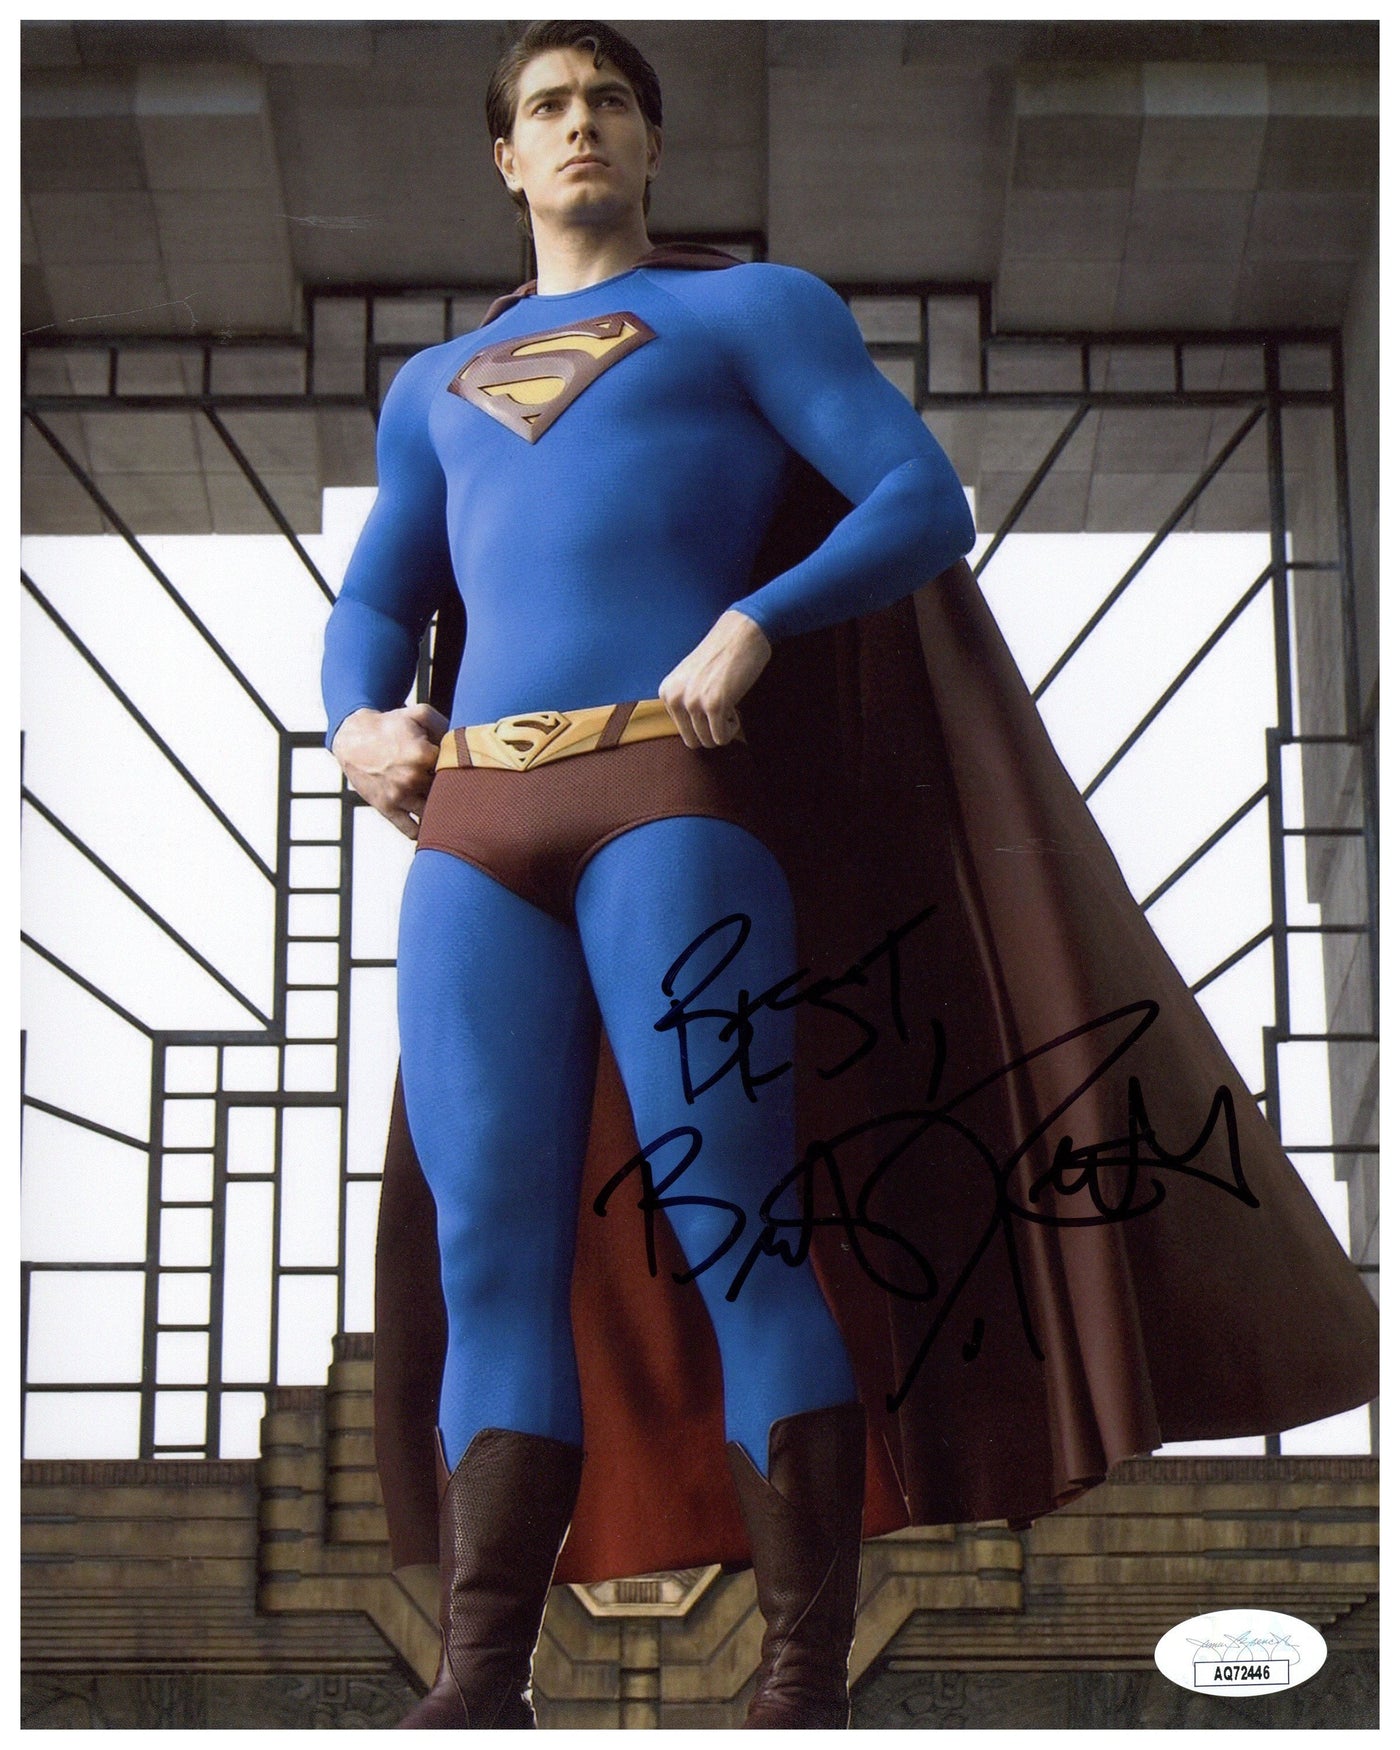 Brandon Routh Signed 8x10 Photo Superman Returns Autographed JSA COA 2